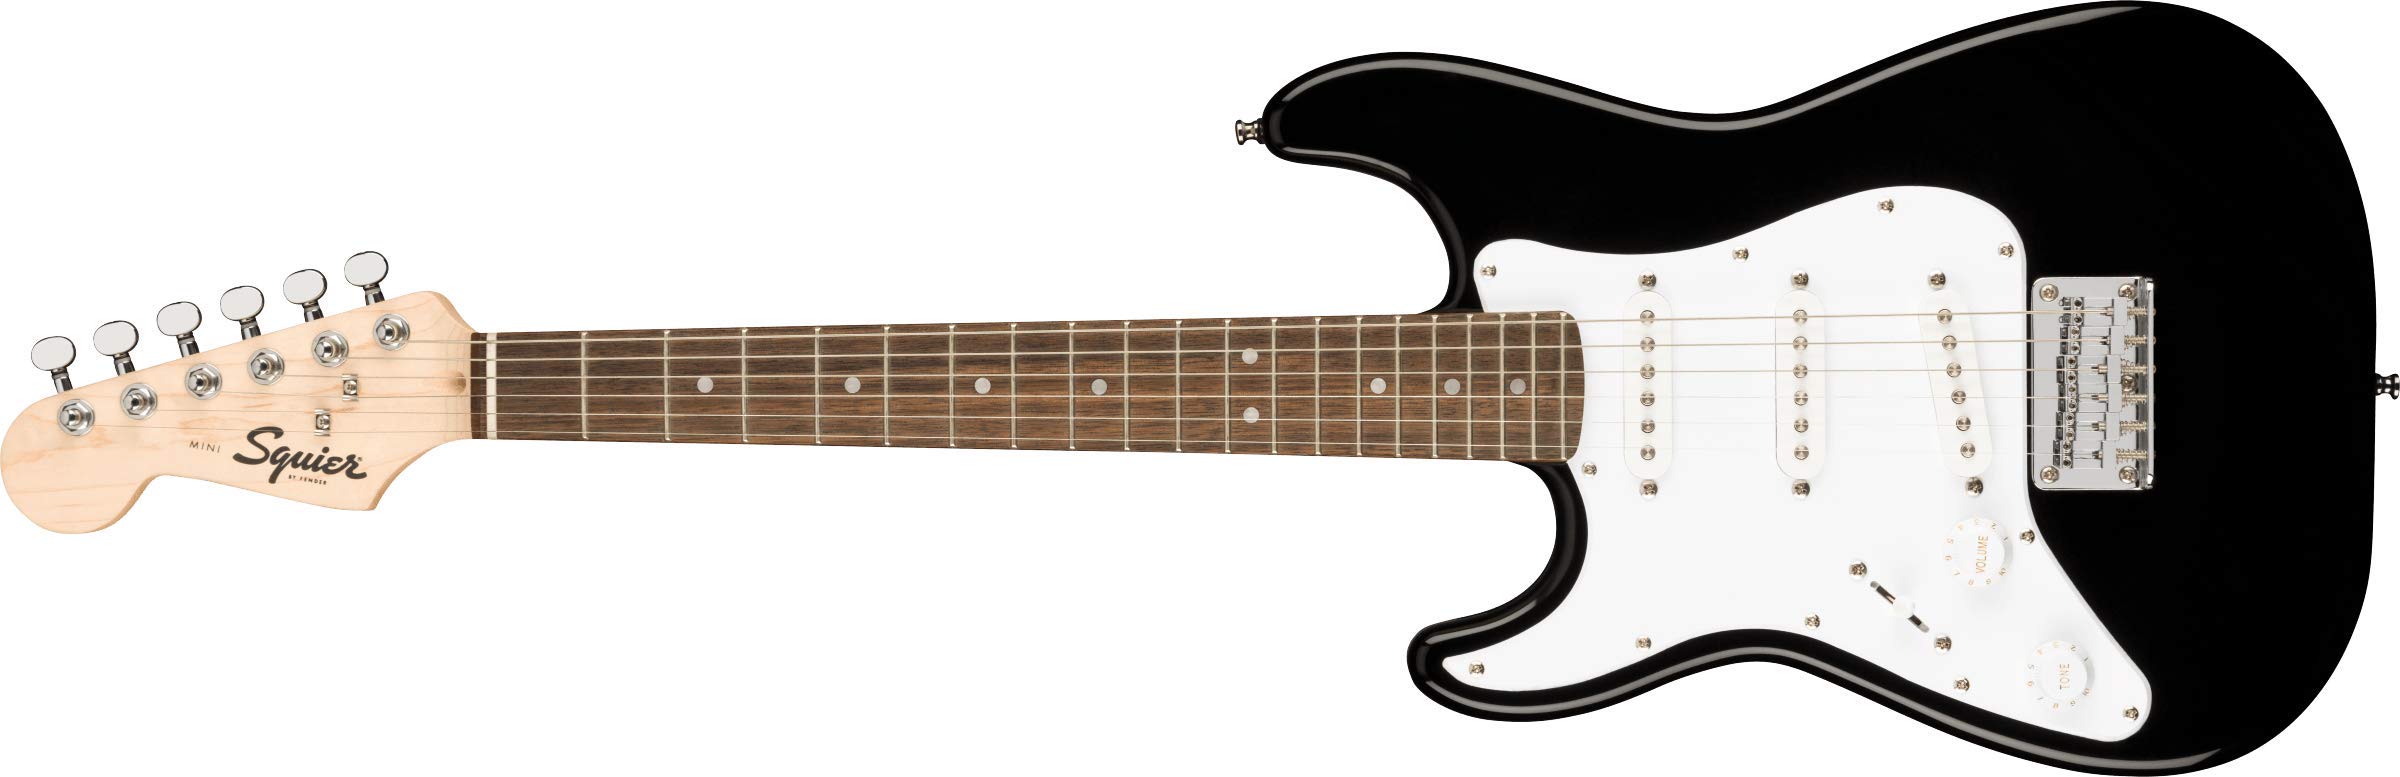 Fender Squier by Mini Strat、ローレル指板、ブラック、LH...